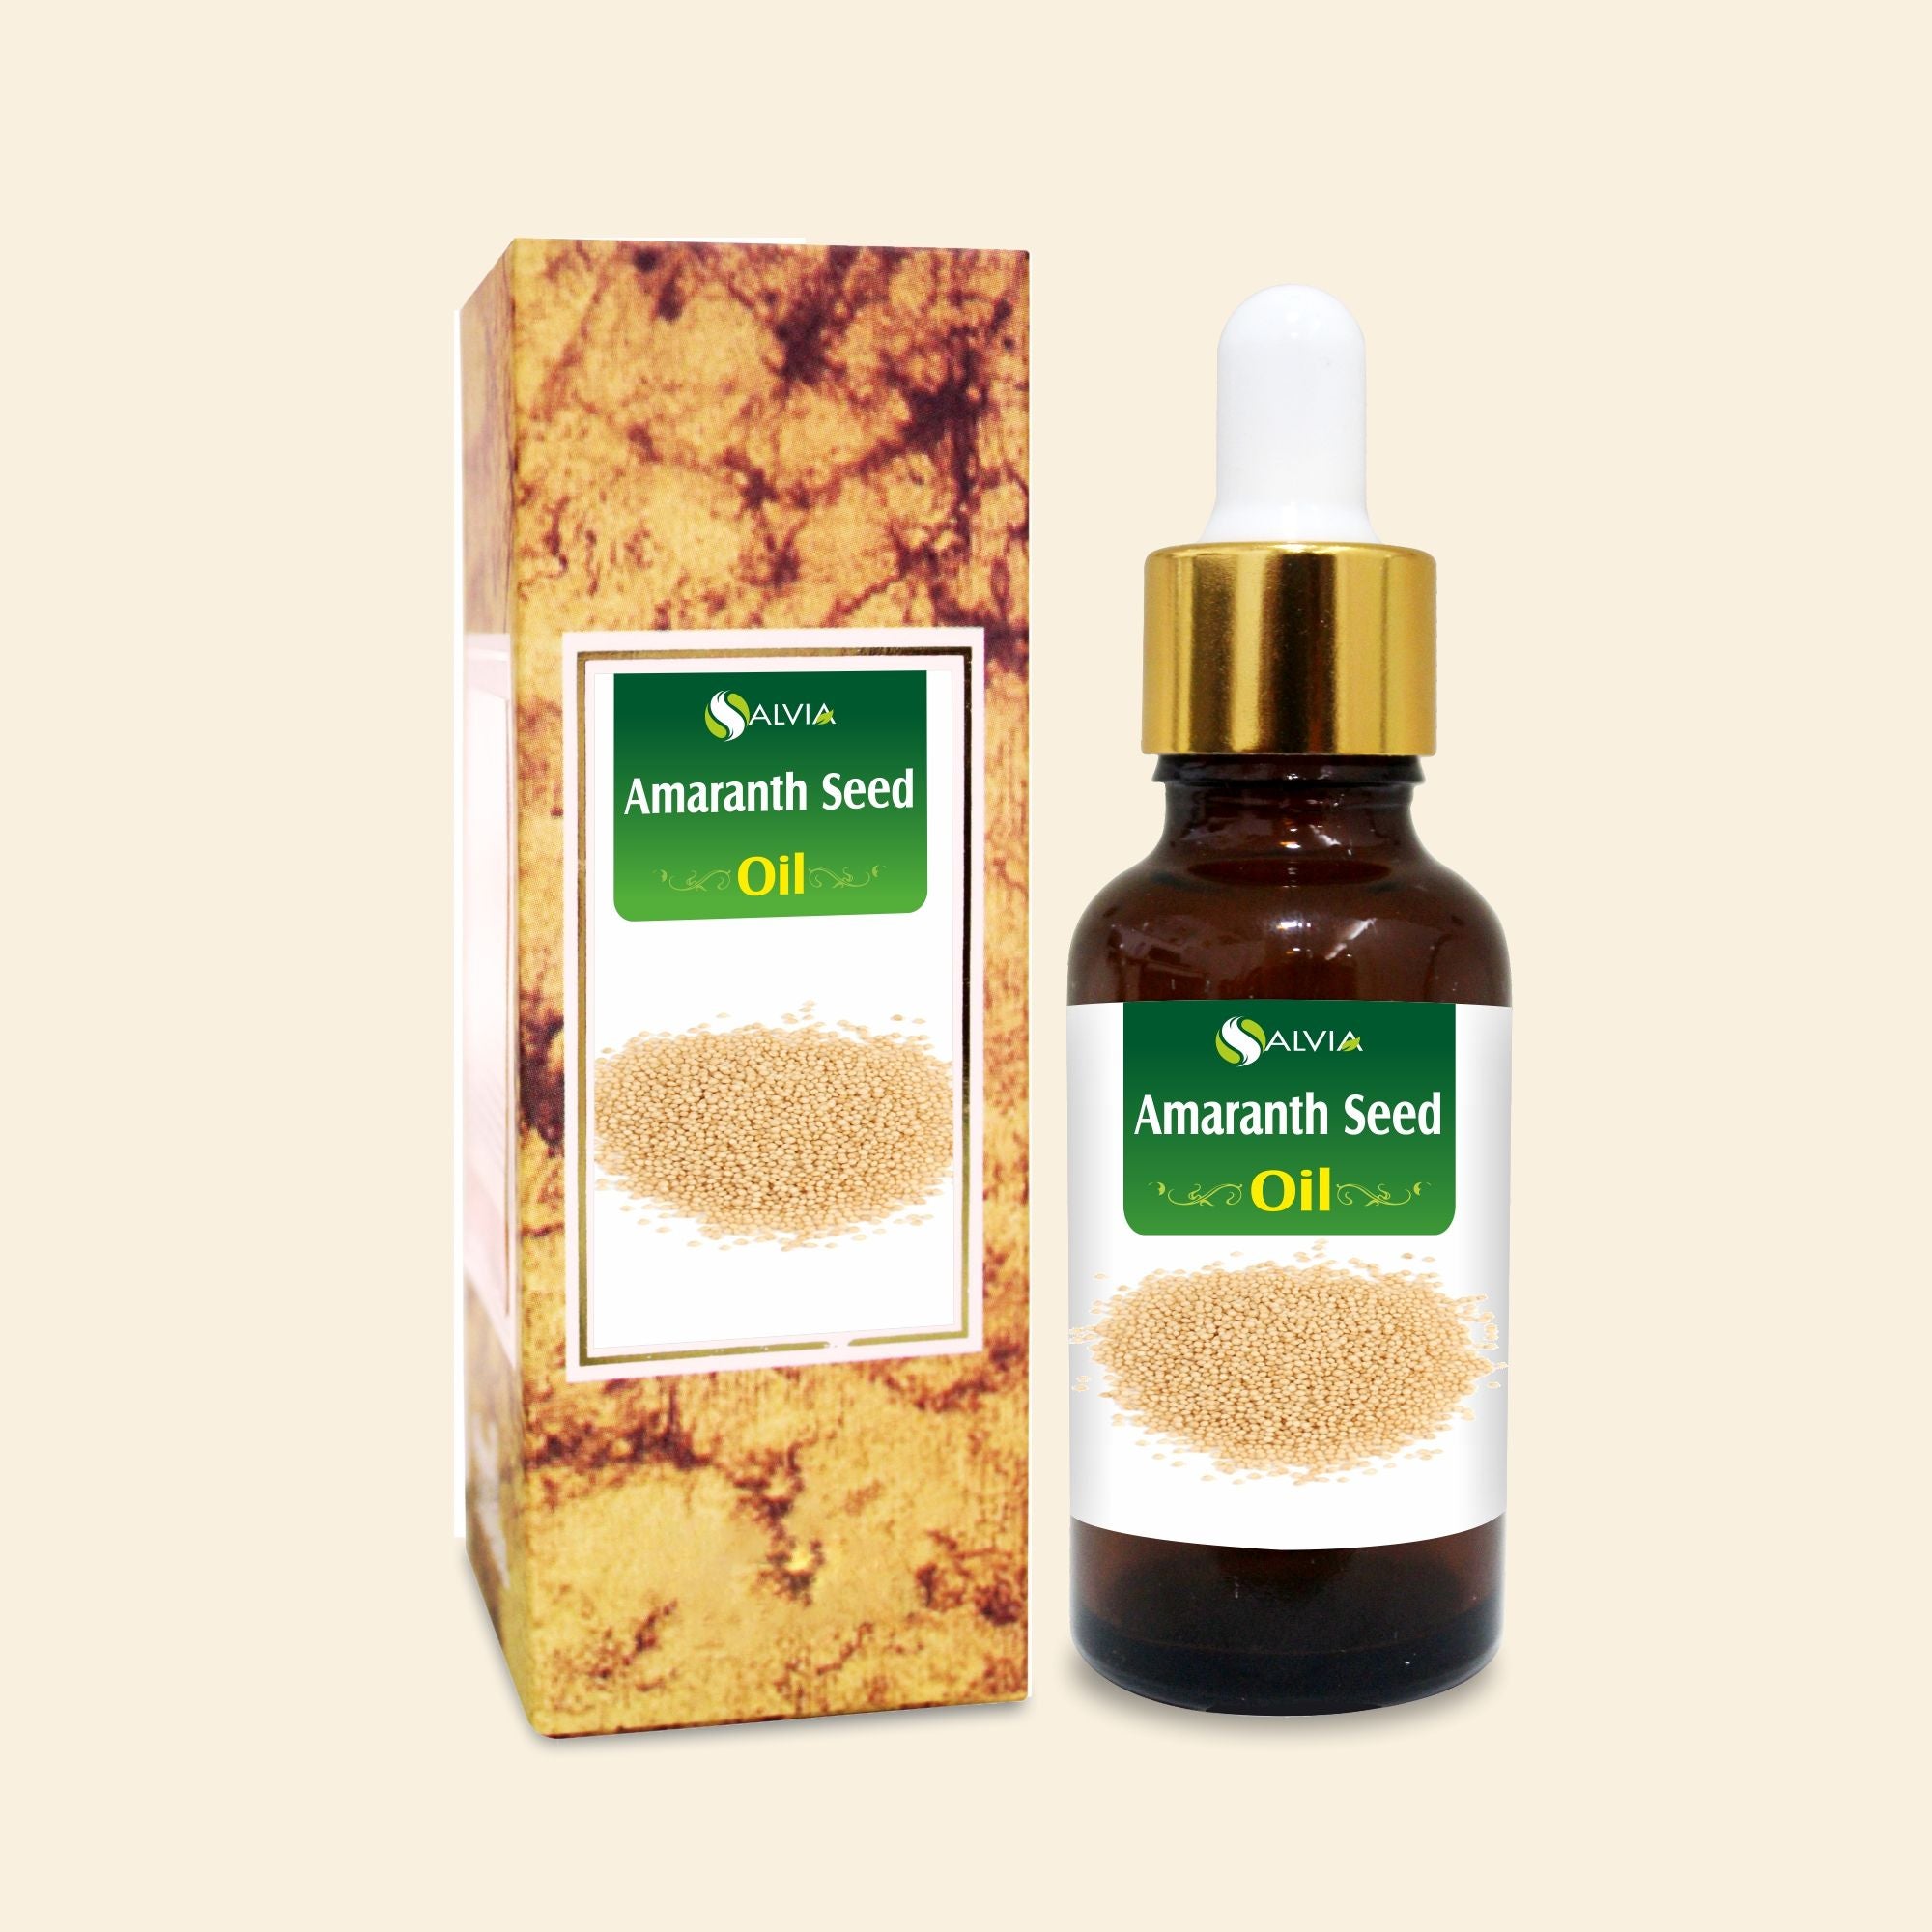 Salvia Natural Carrier Oils Amaranth Seed Oil (Amaranthus-Caudatus) 100% Natural Pure Carrier Oil